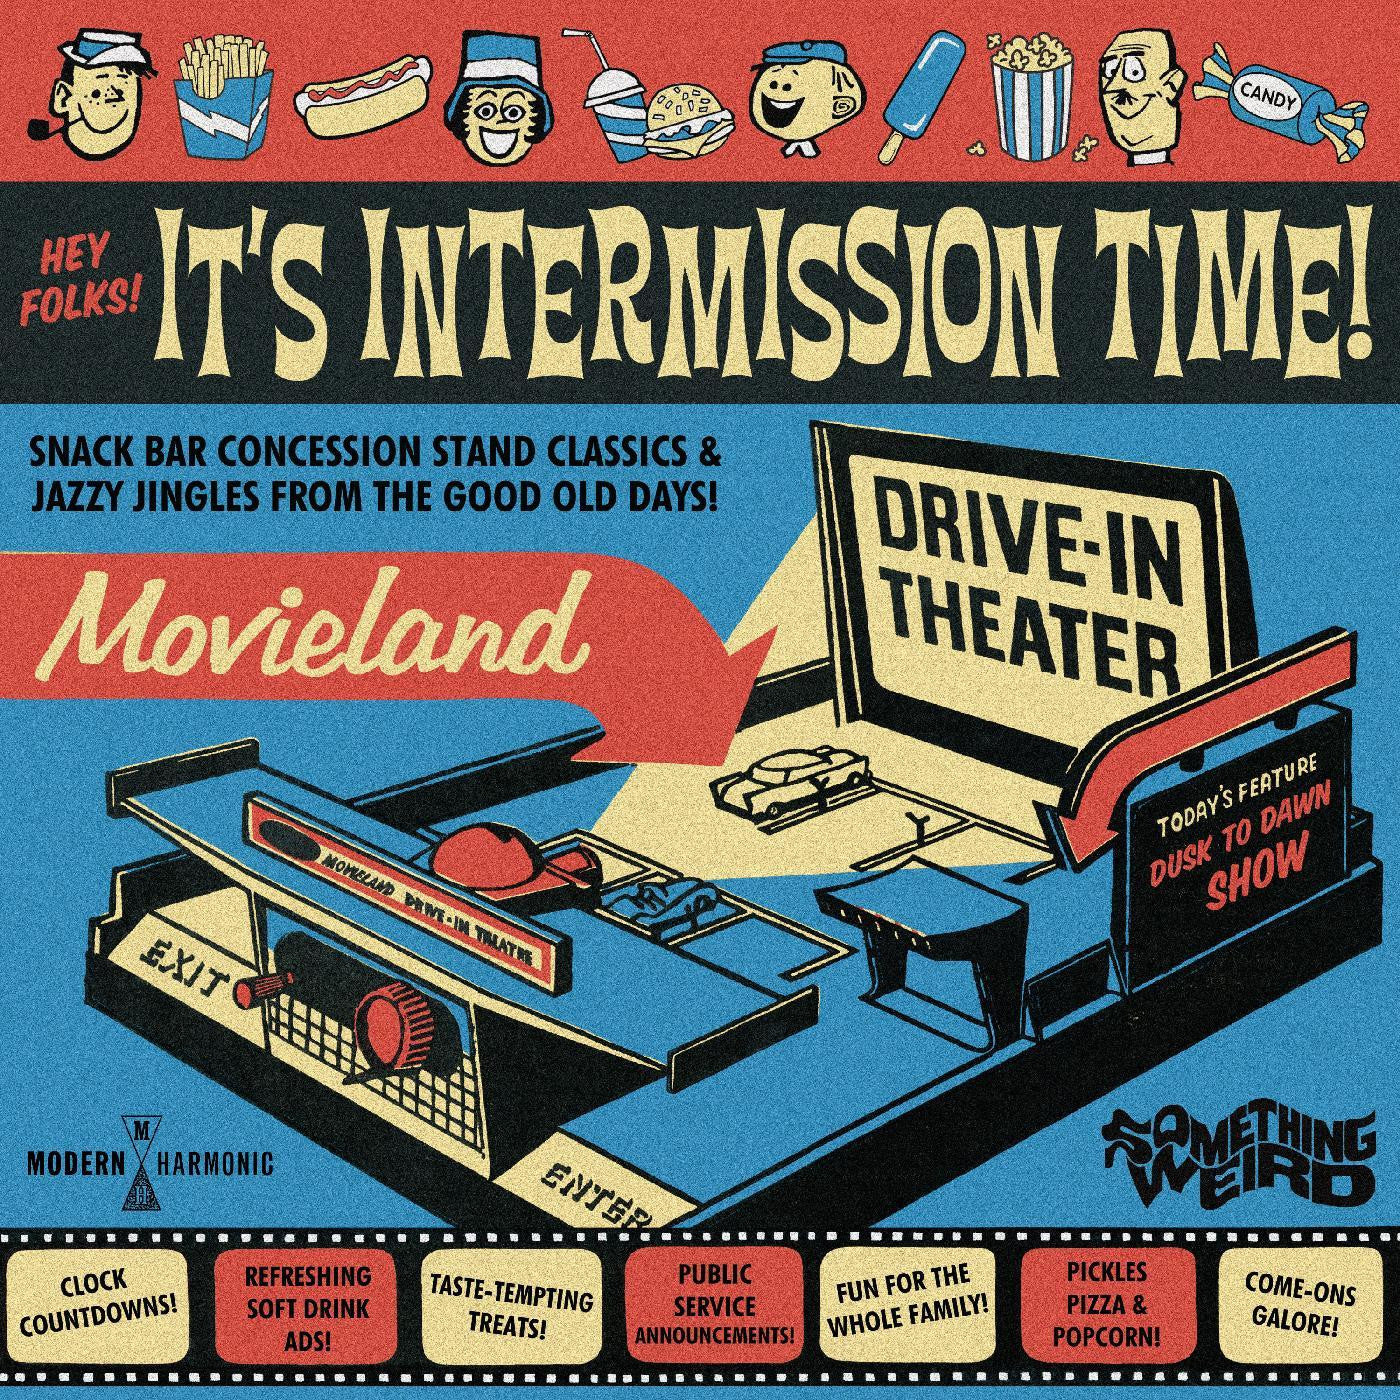 CD - Hey Folks! It's Intermission Time!